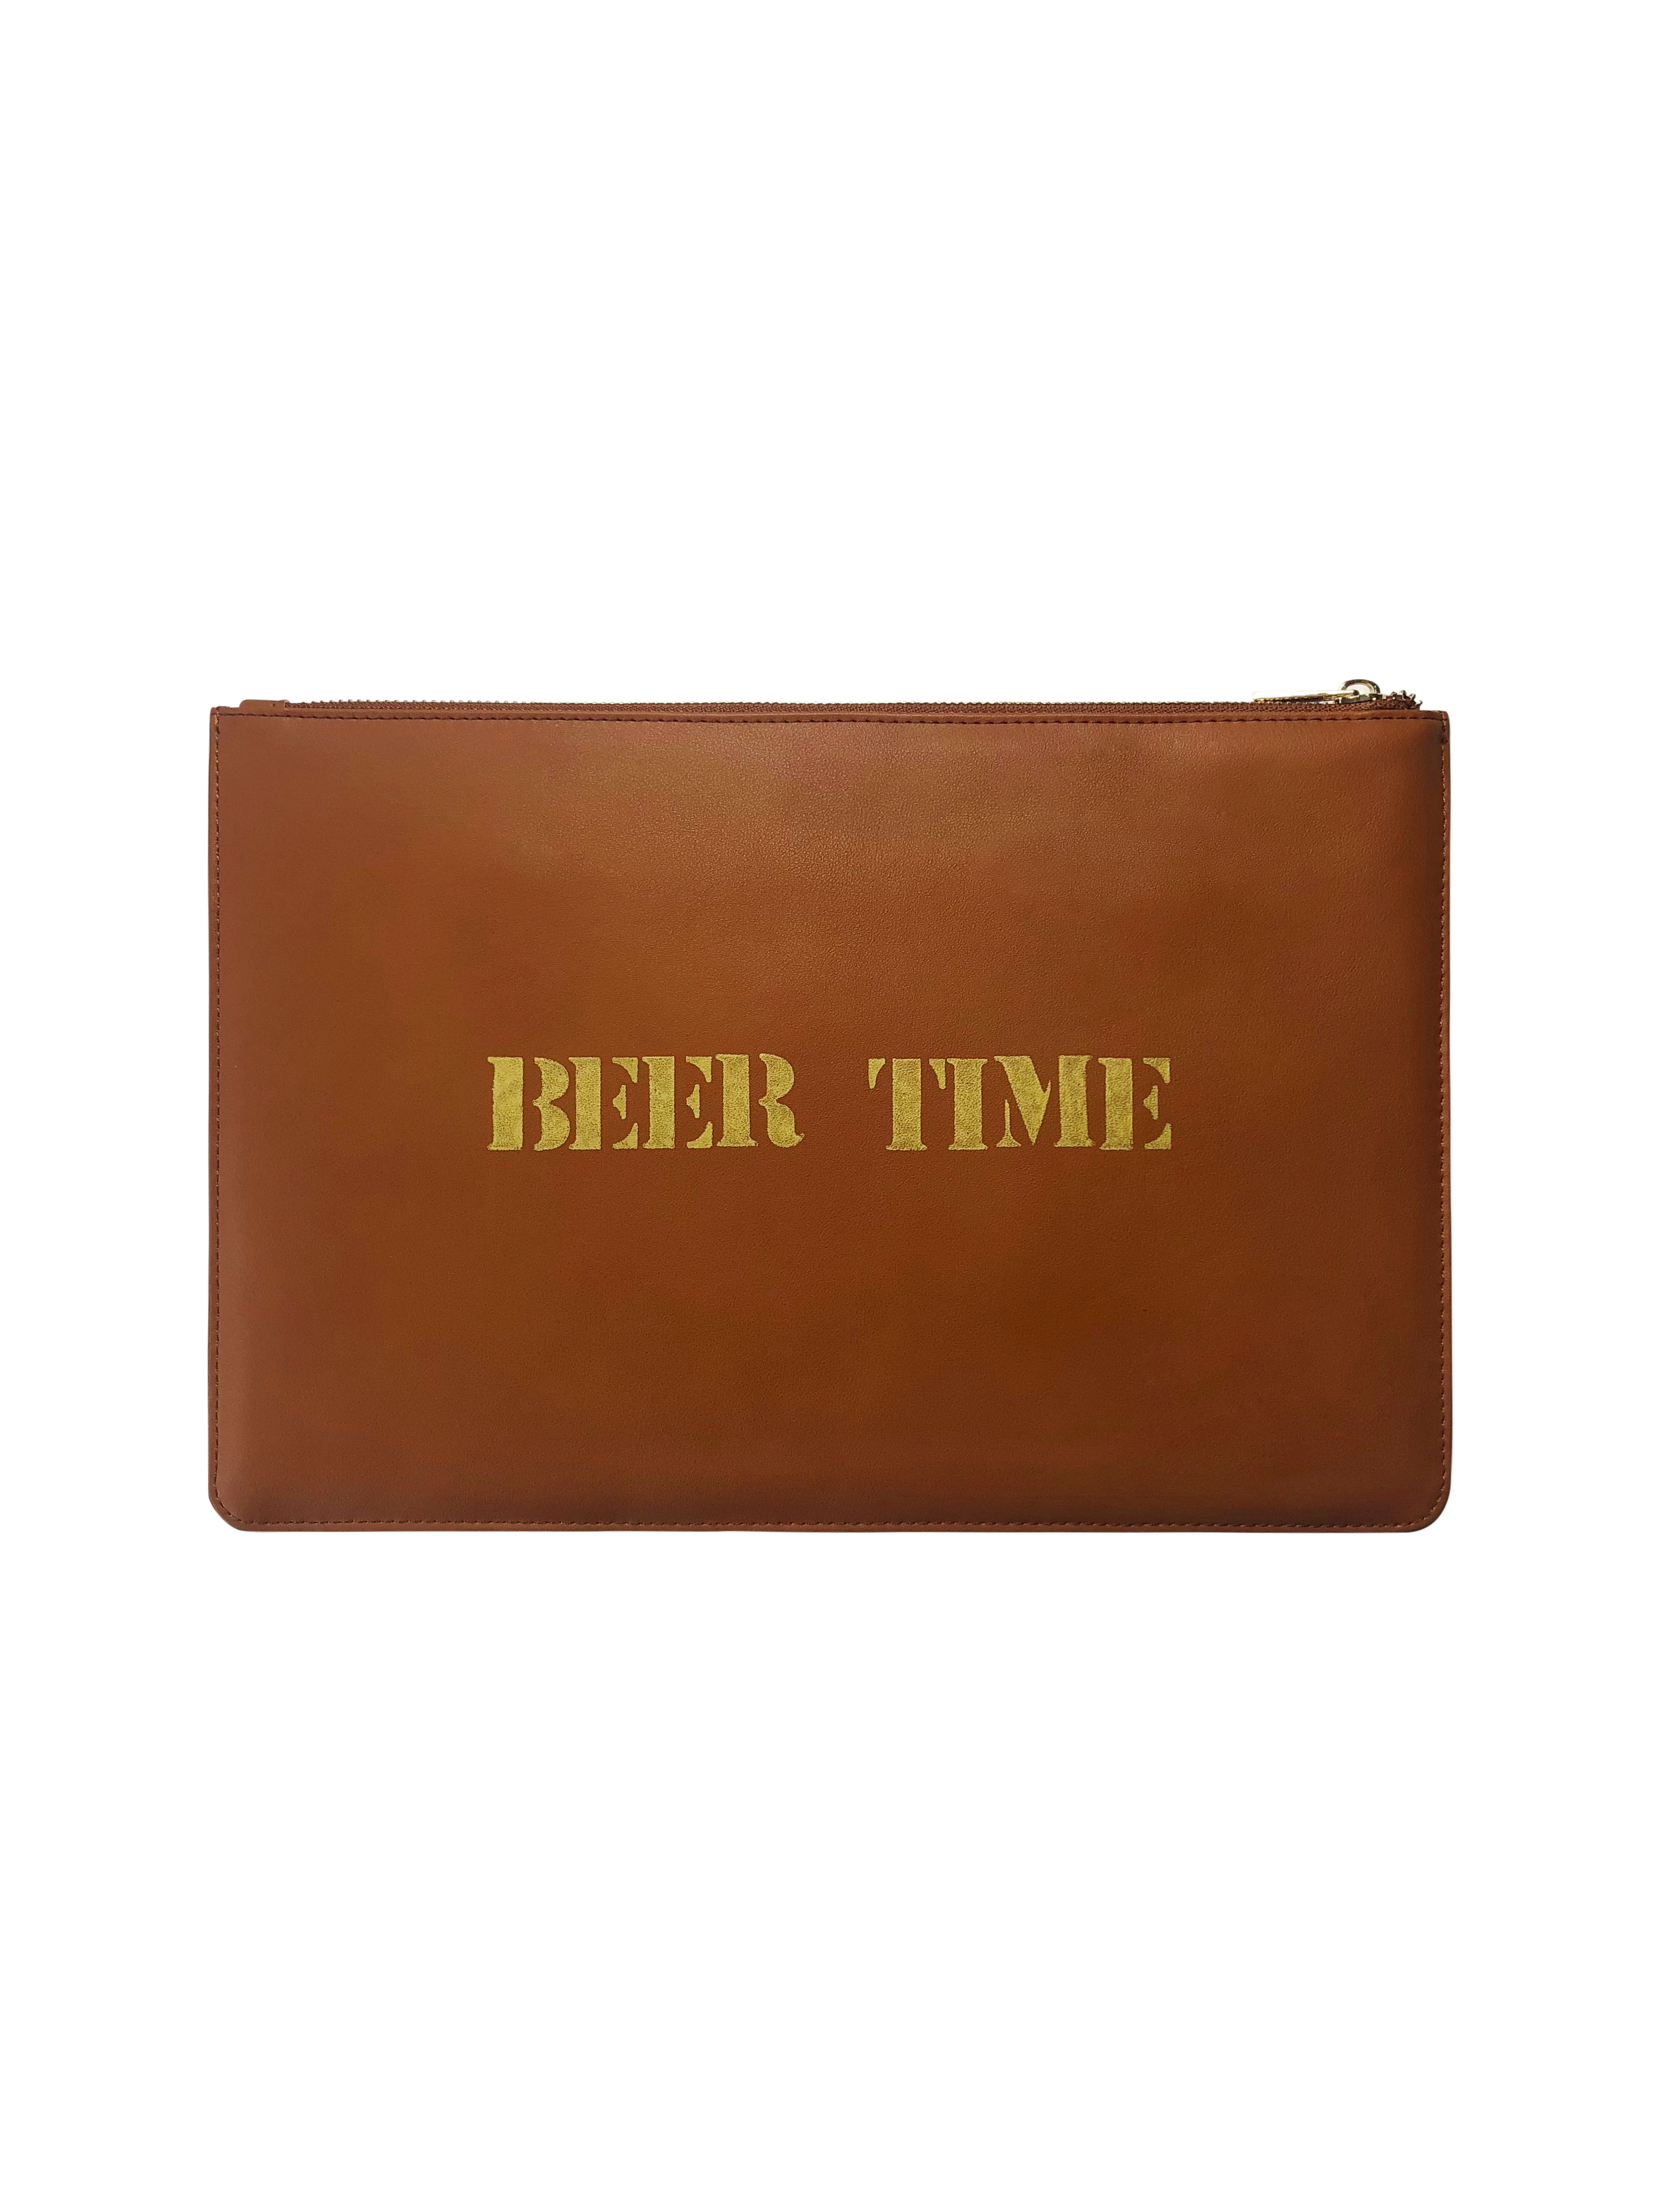 Organizer - beer time